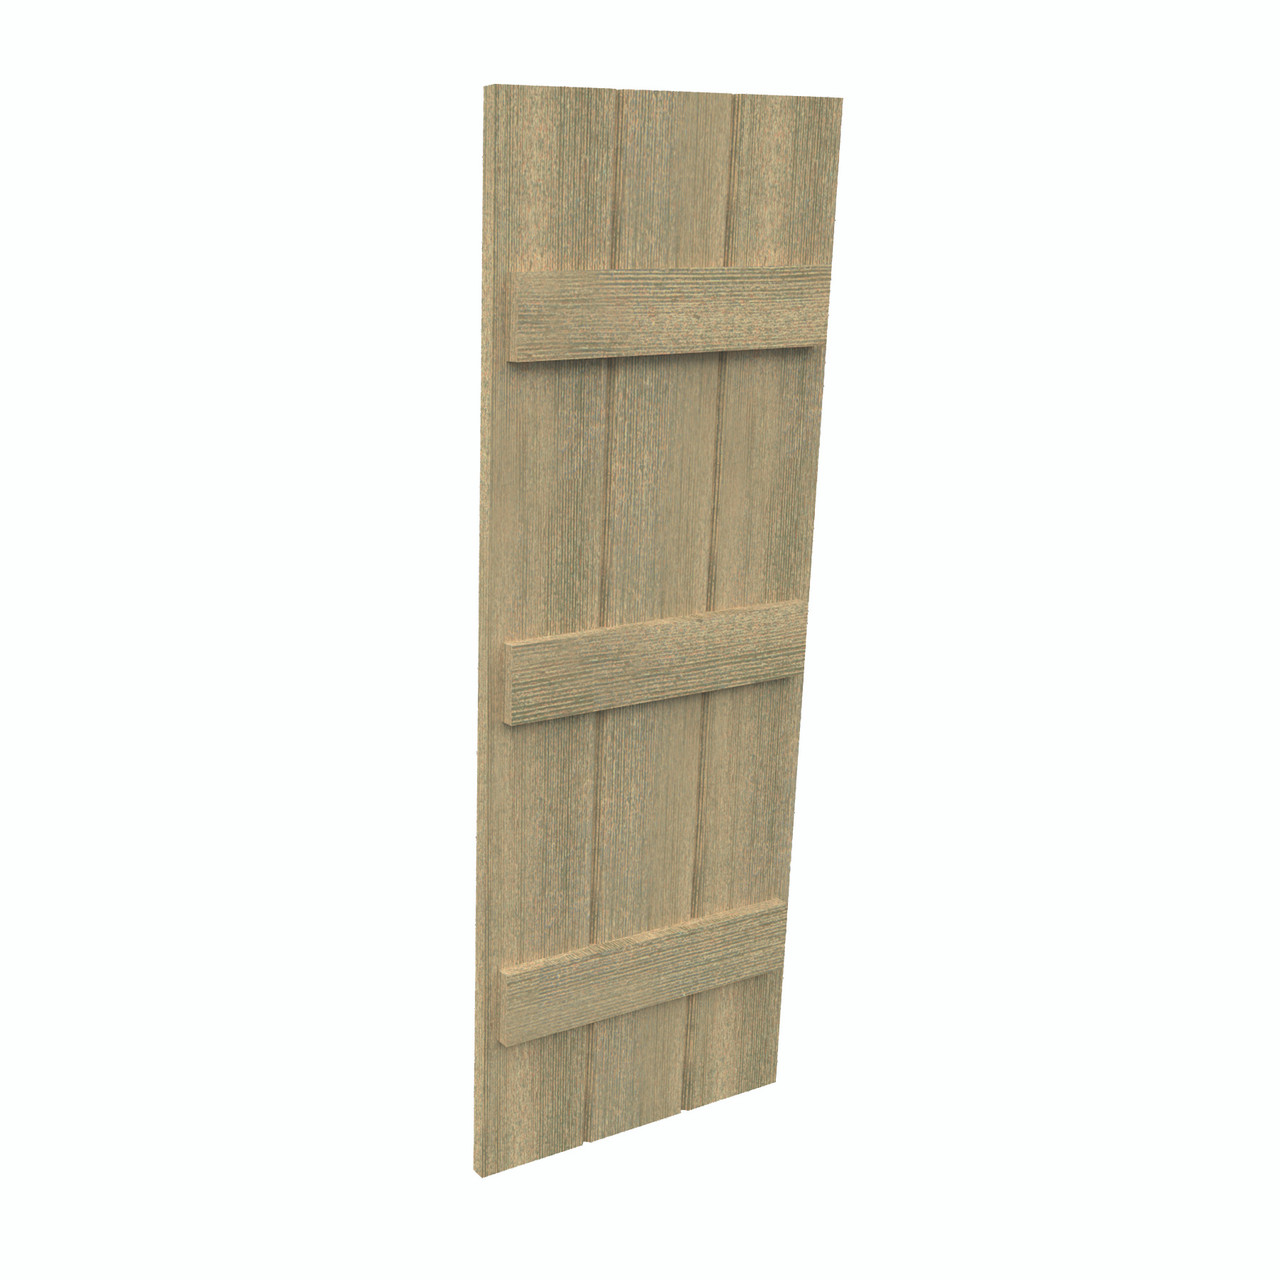 18 inch by 29 inch Plank Shutter with 3-Plank, 3-Batten